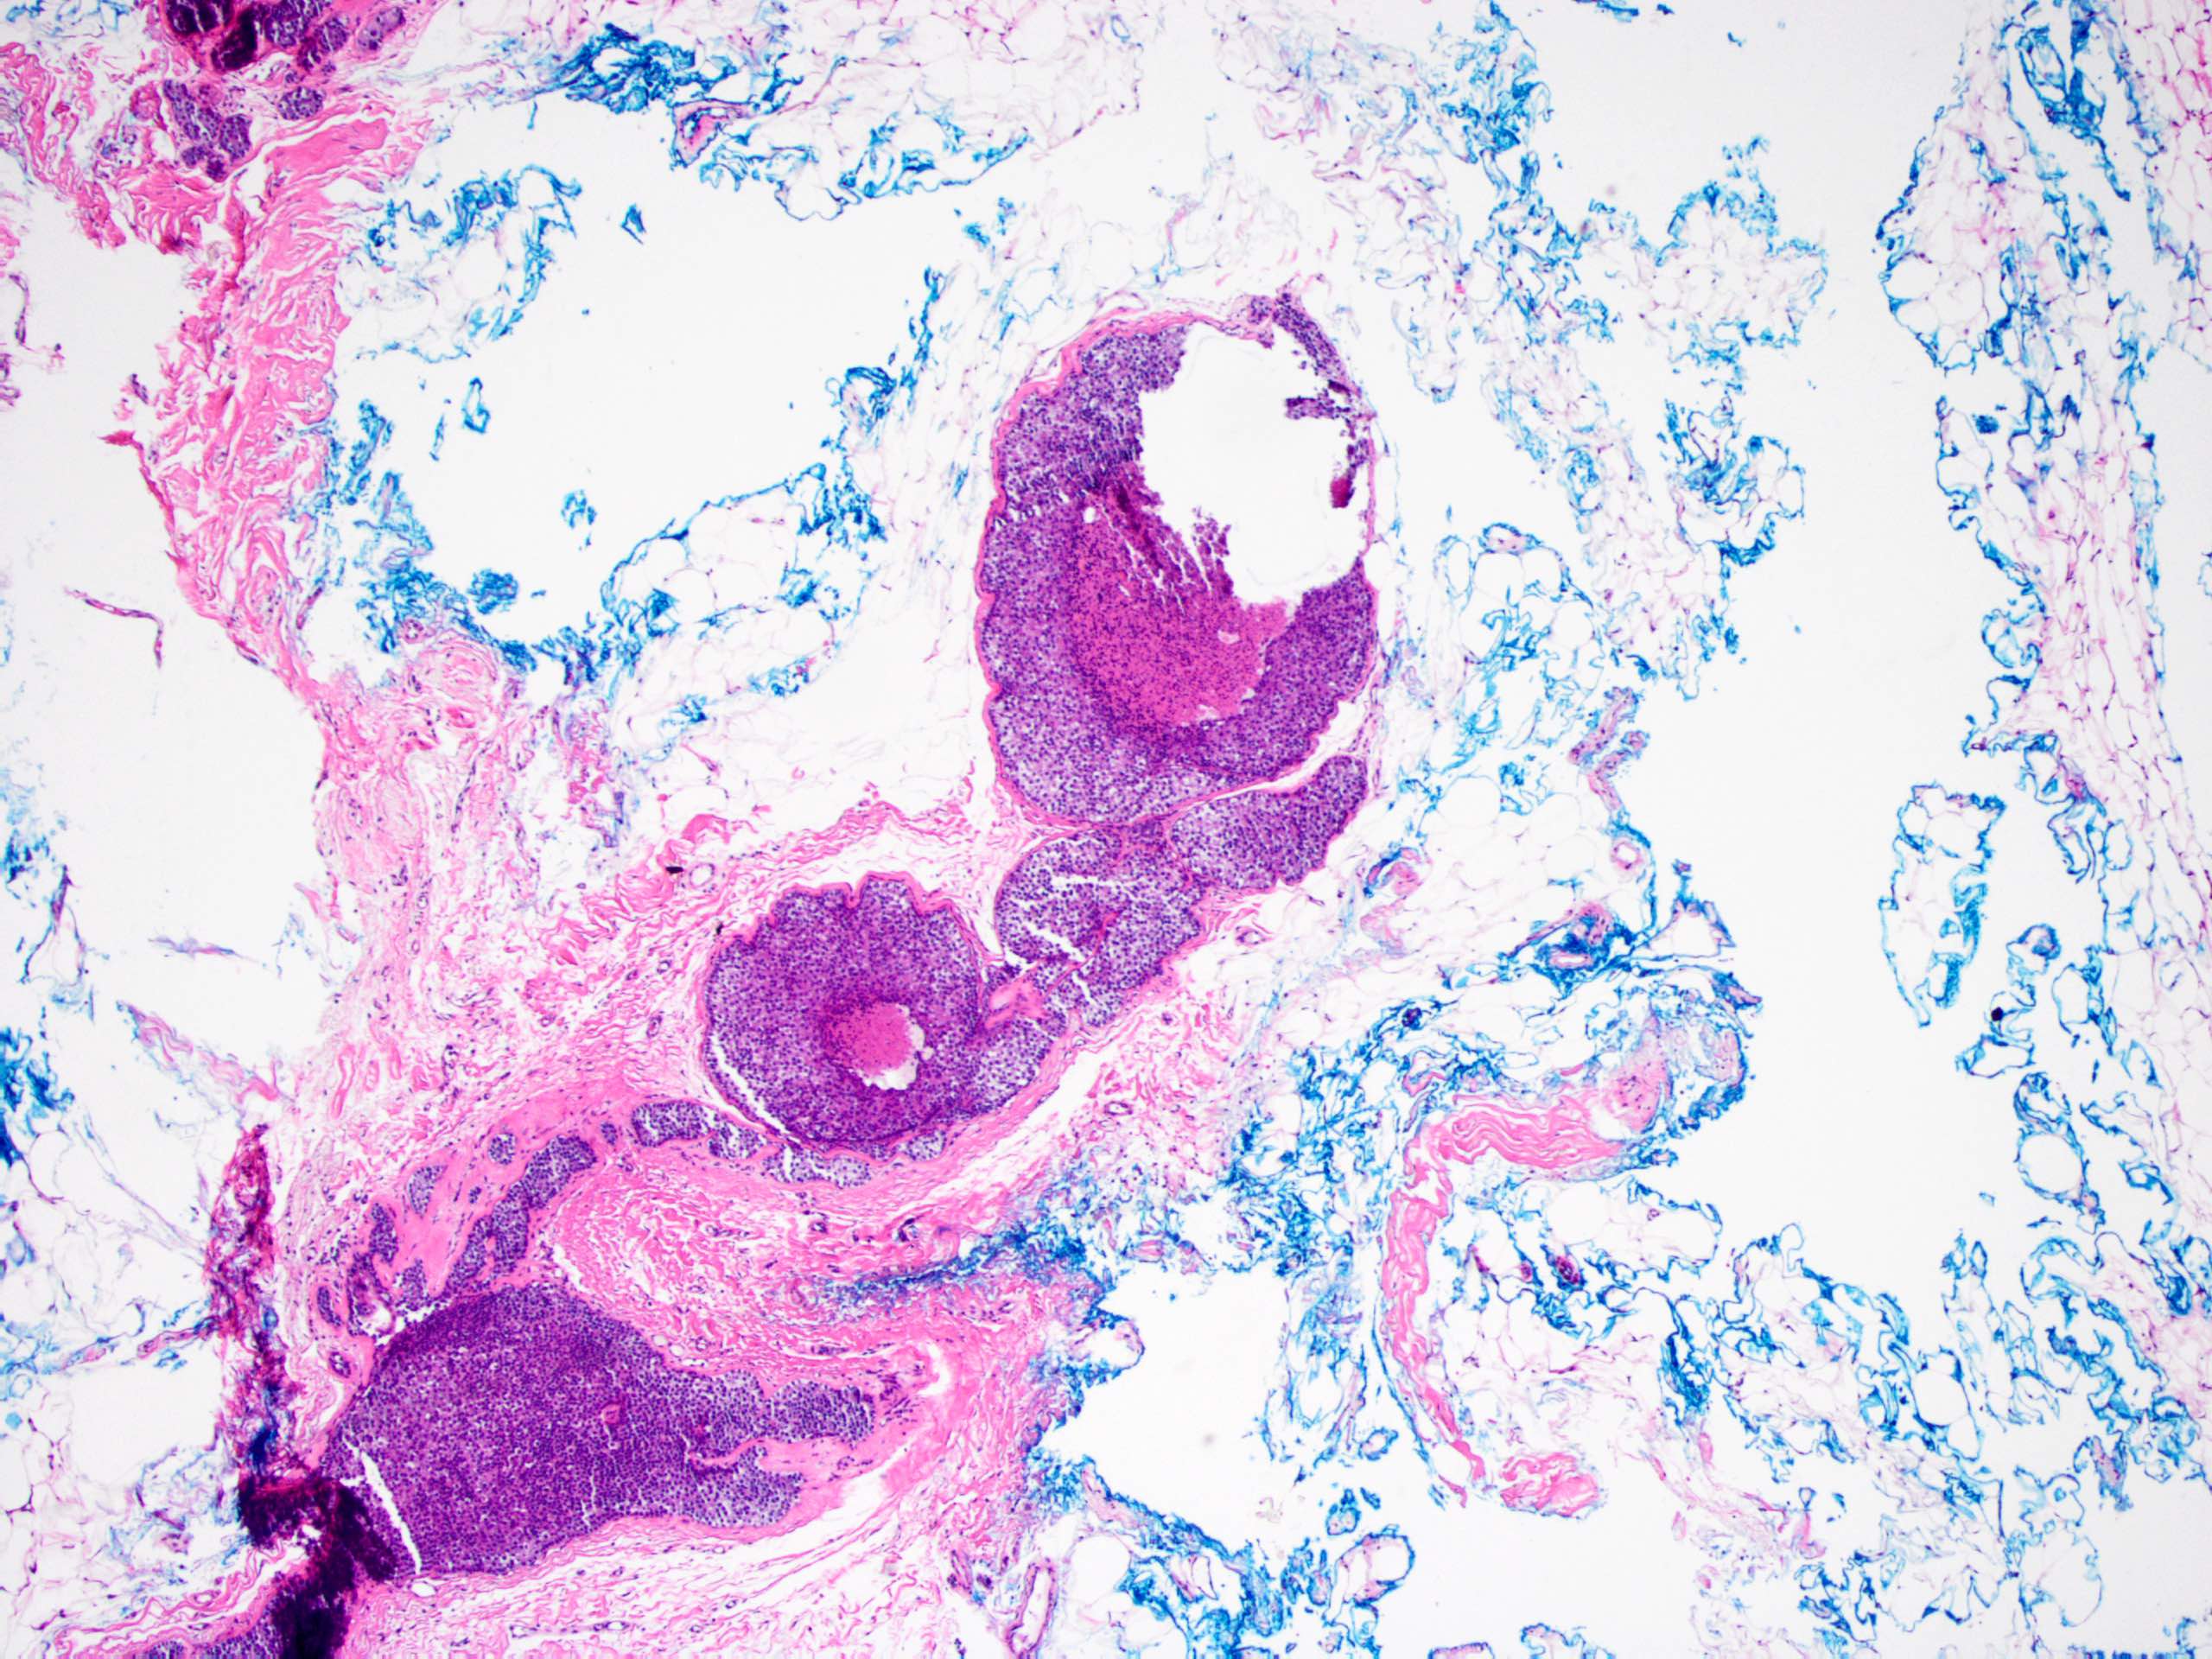 Lobular carcinoma in situ